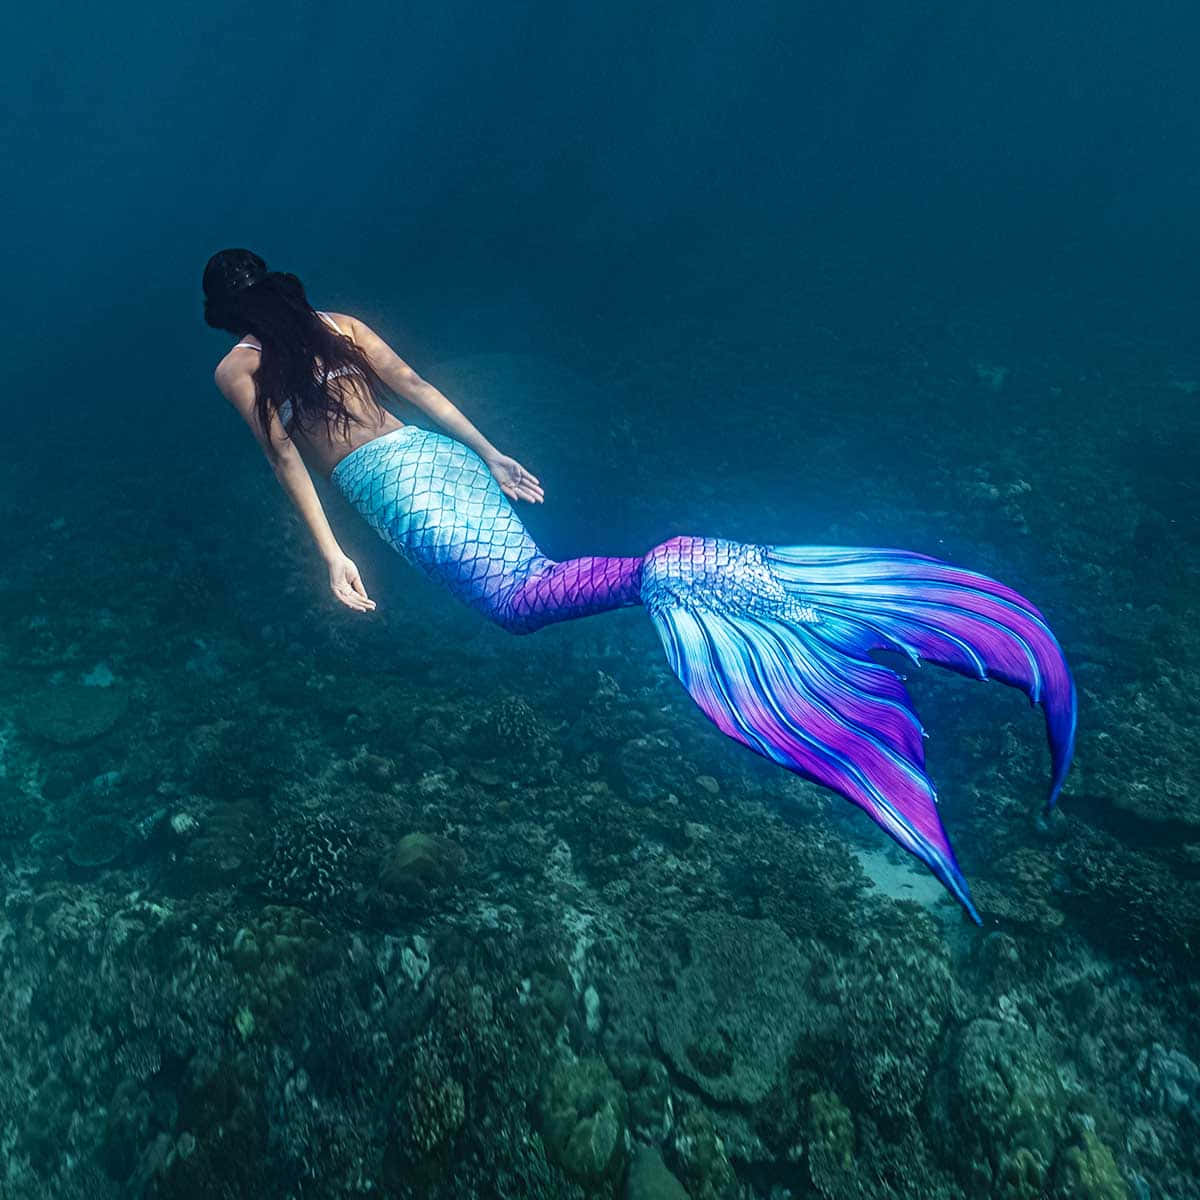 “Fish Tales - A Magical Duo of Mermaids”